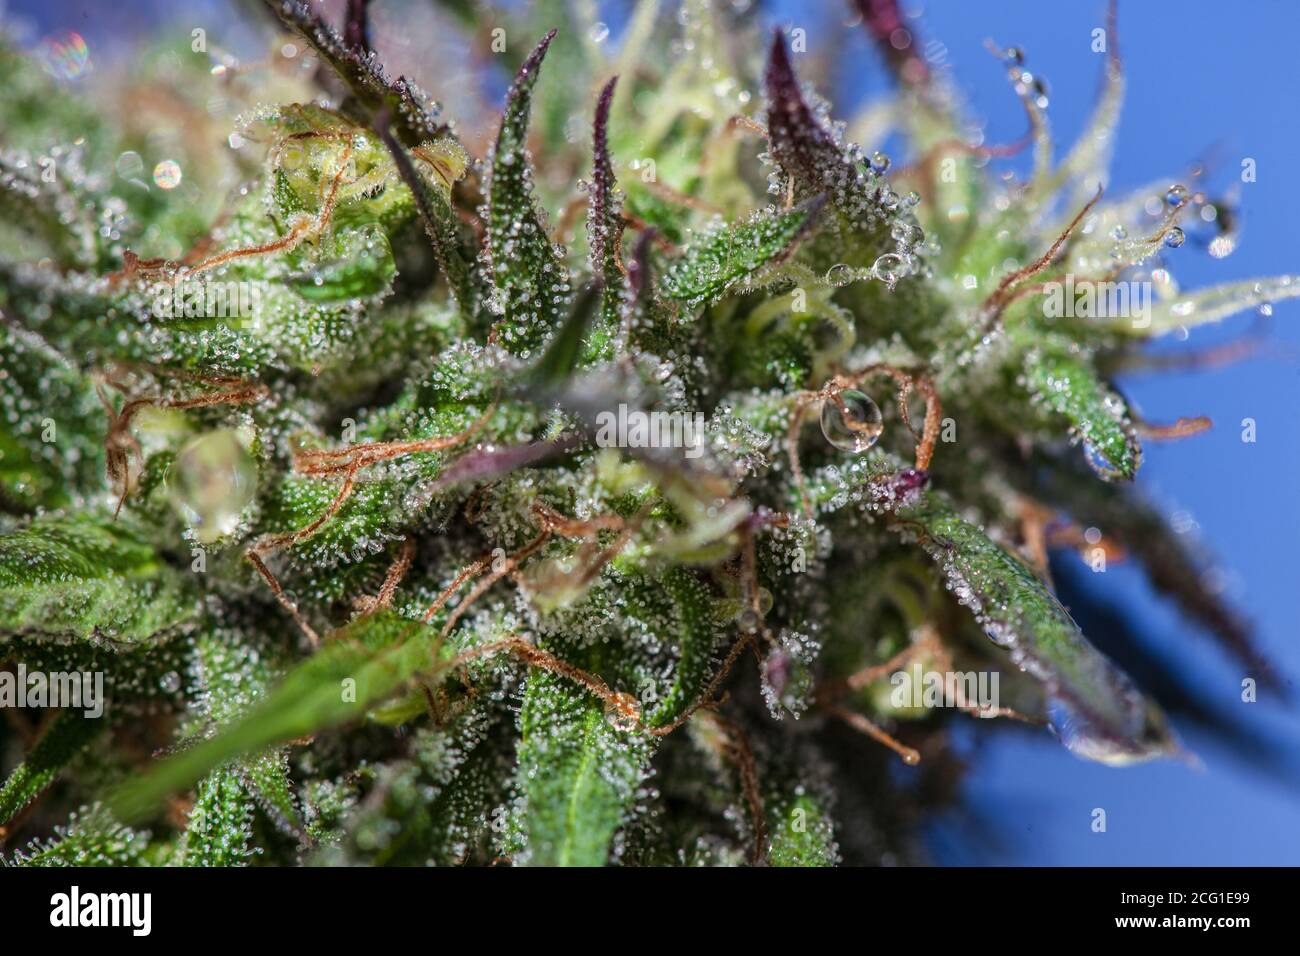 water droplet on marijuana plant. High quality photo Stock Photo